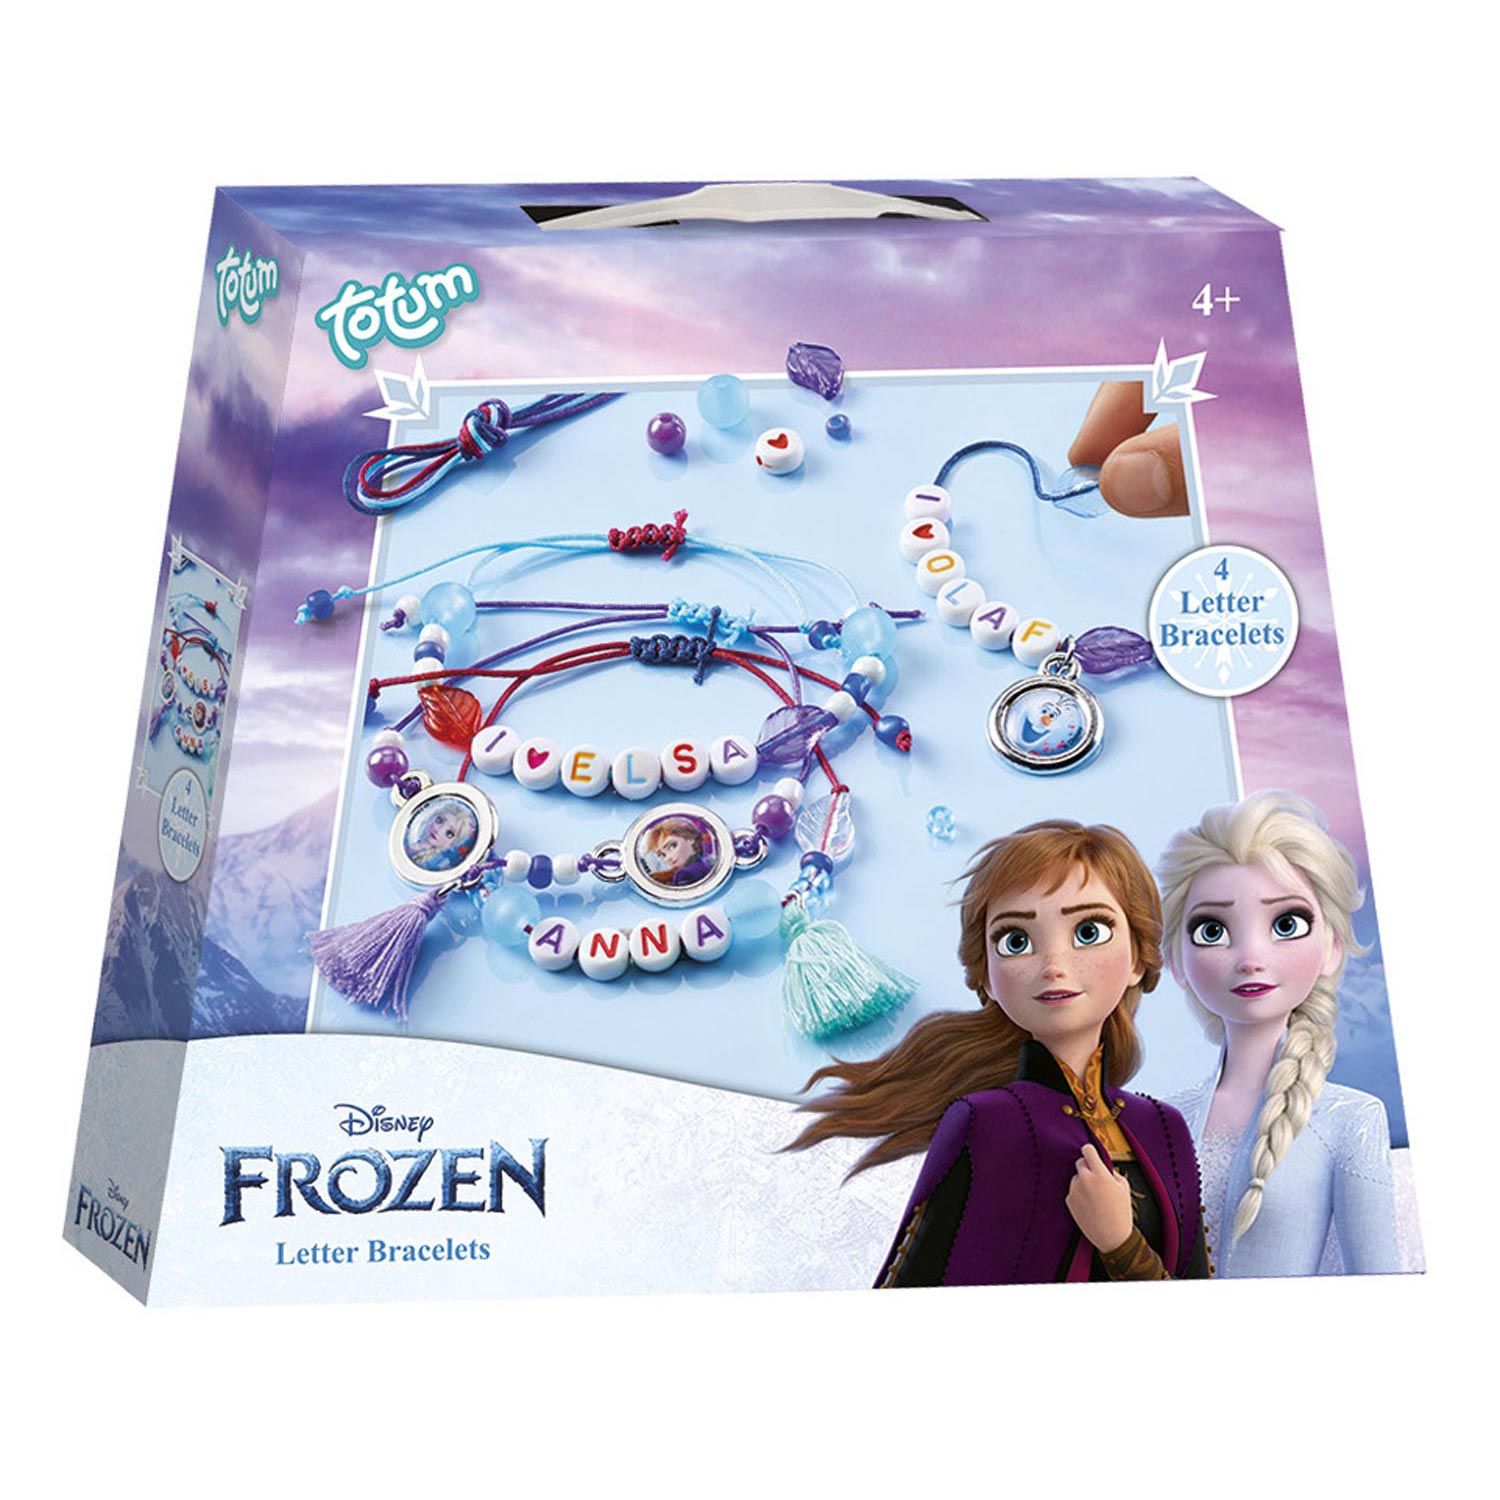 Totum Disney Frozen - 4 letter armbandjes maken - Letter Bracelets - Anna en Elsa sieradenset - cadeautip